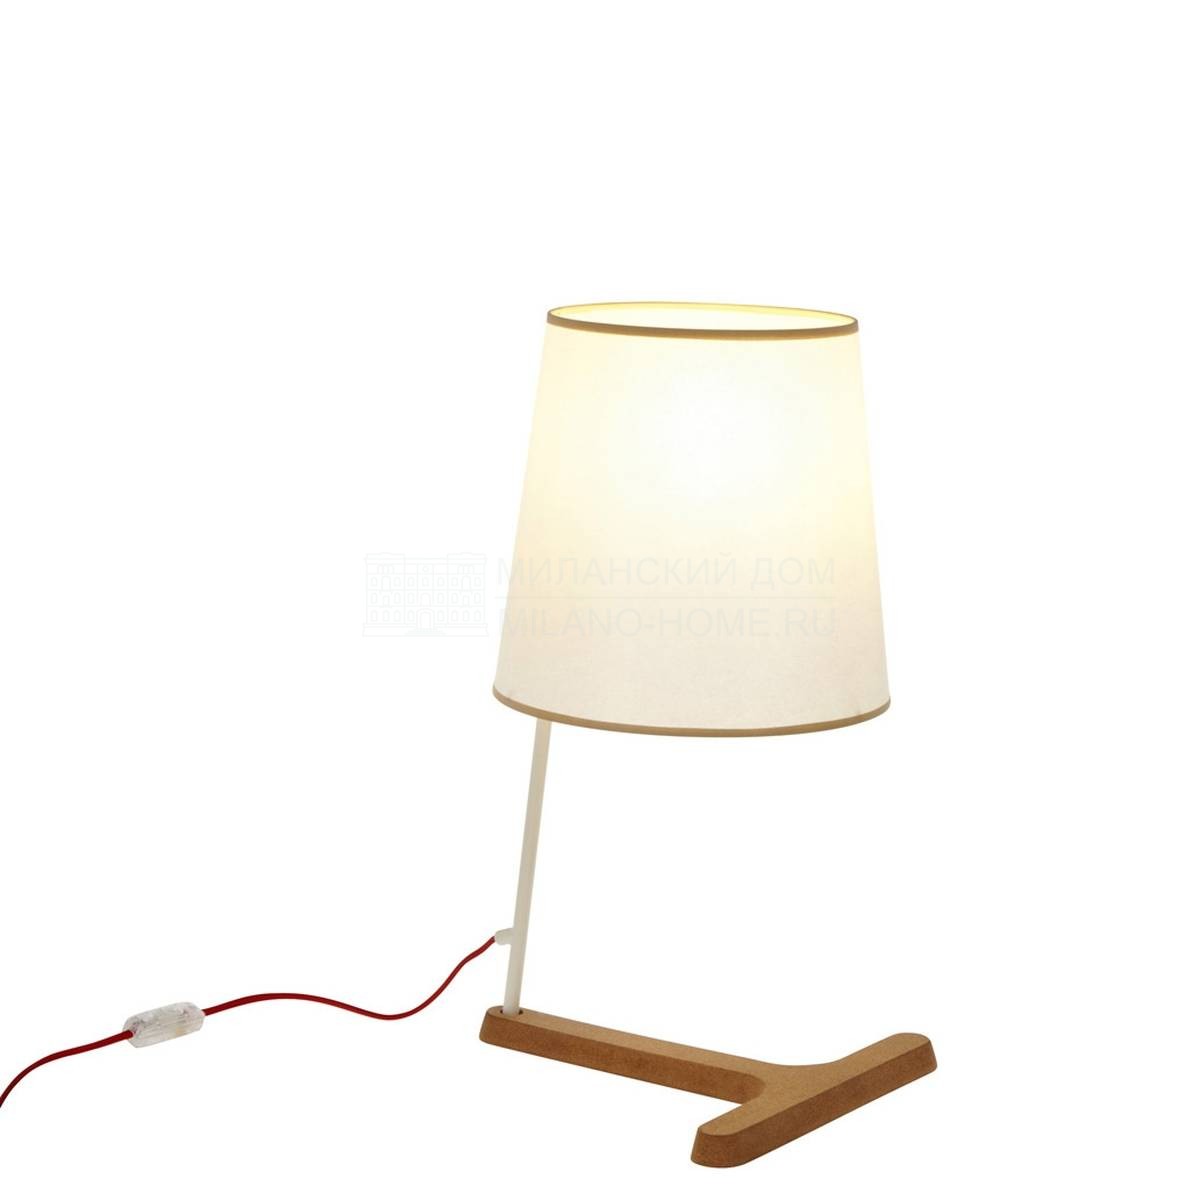 Настольная лампа Сork t-high table lamp из Франции фабрики FORESTIER